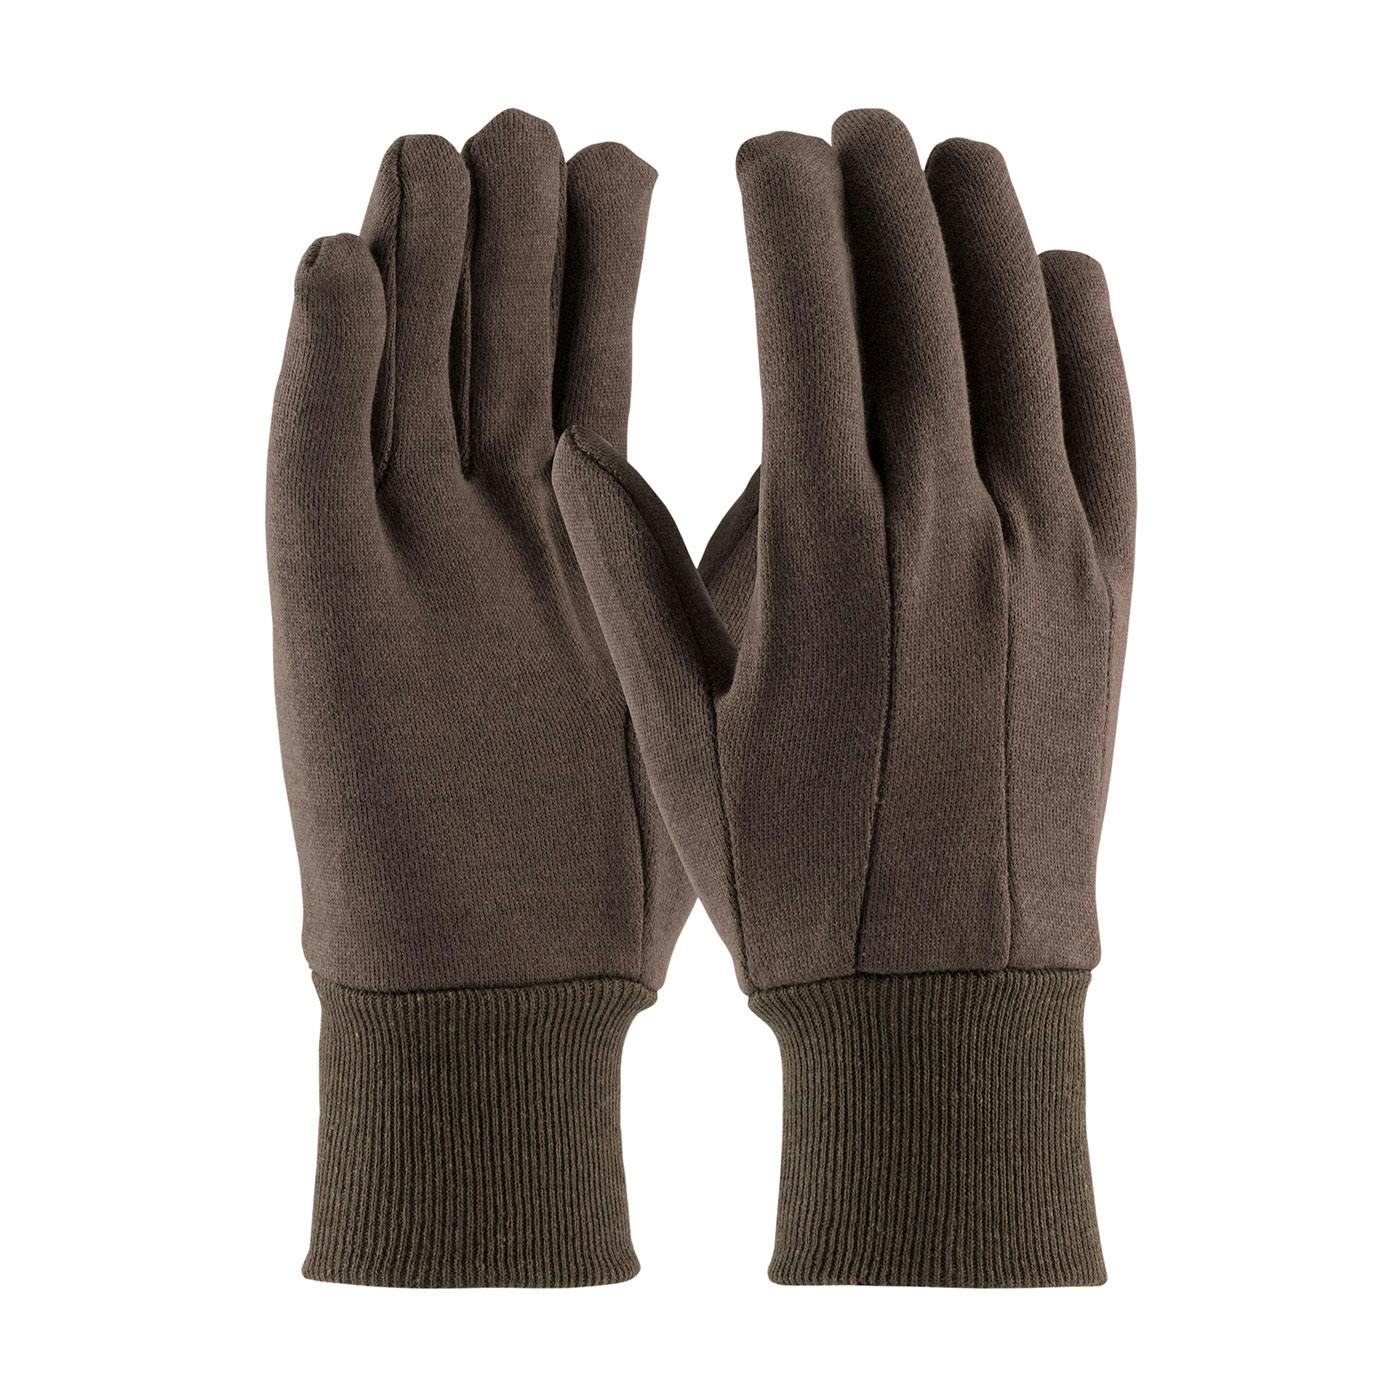 Heavy Weight Cotton/Polyester Jersey Glove - Men's, Brown (KBJ9I) - MENS